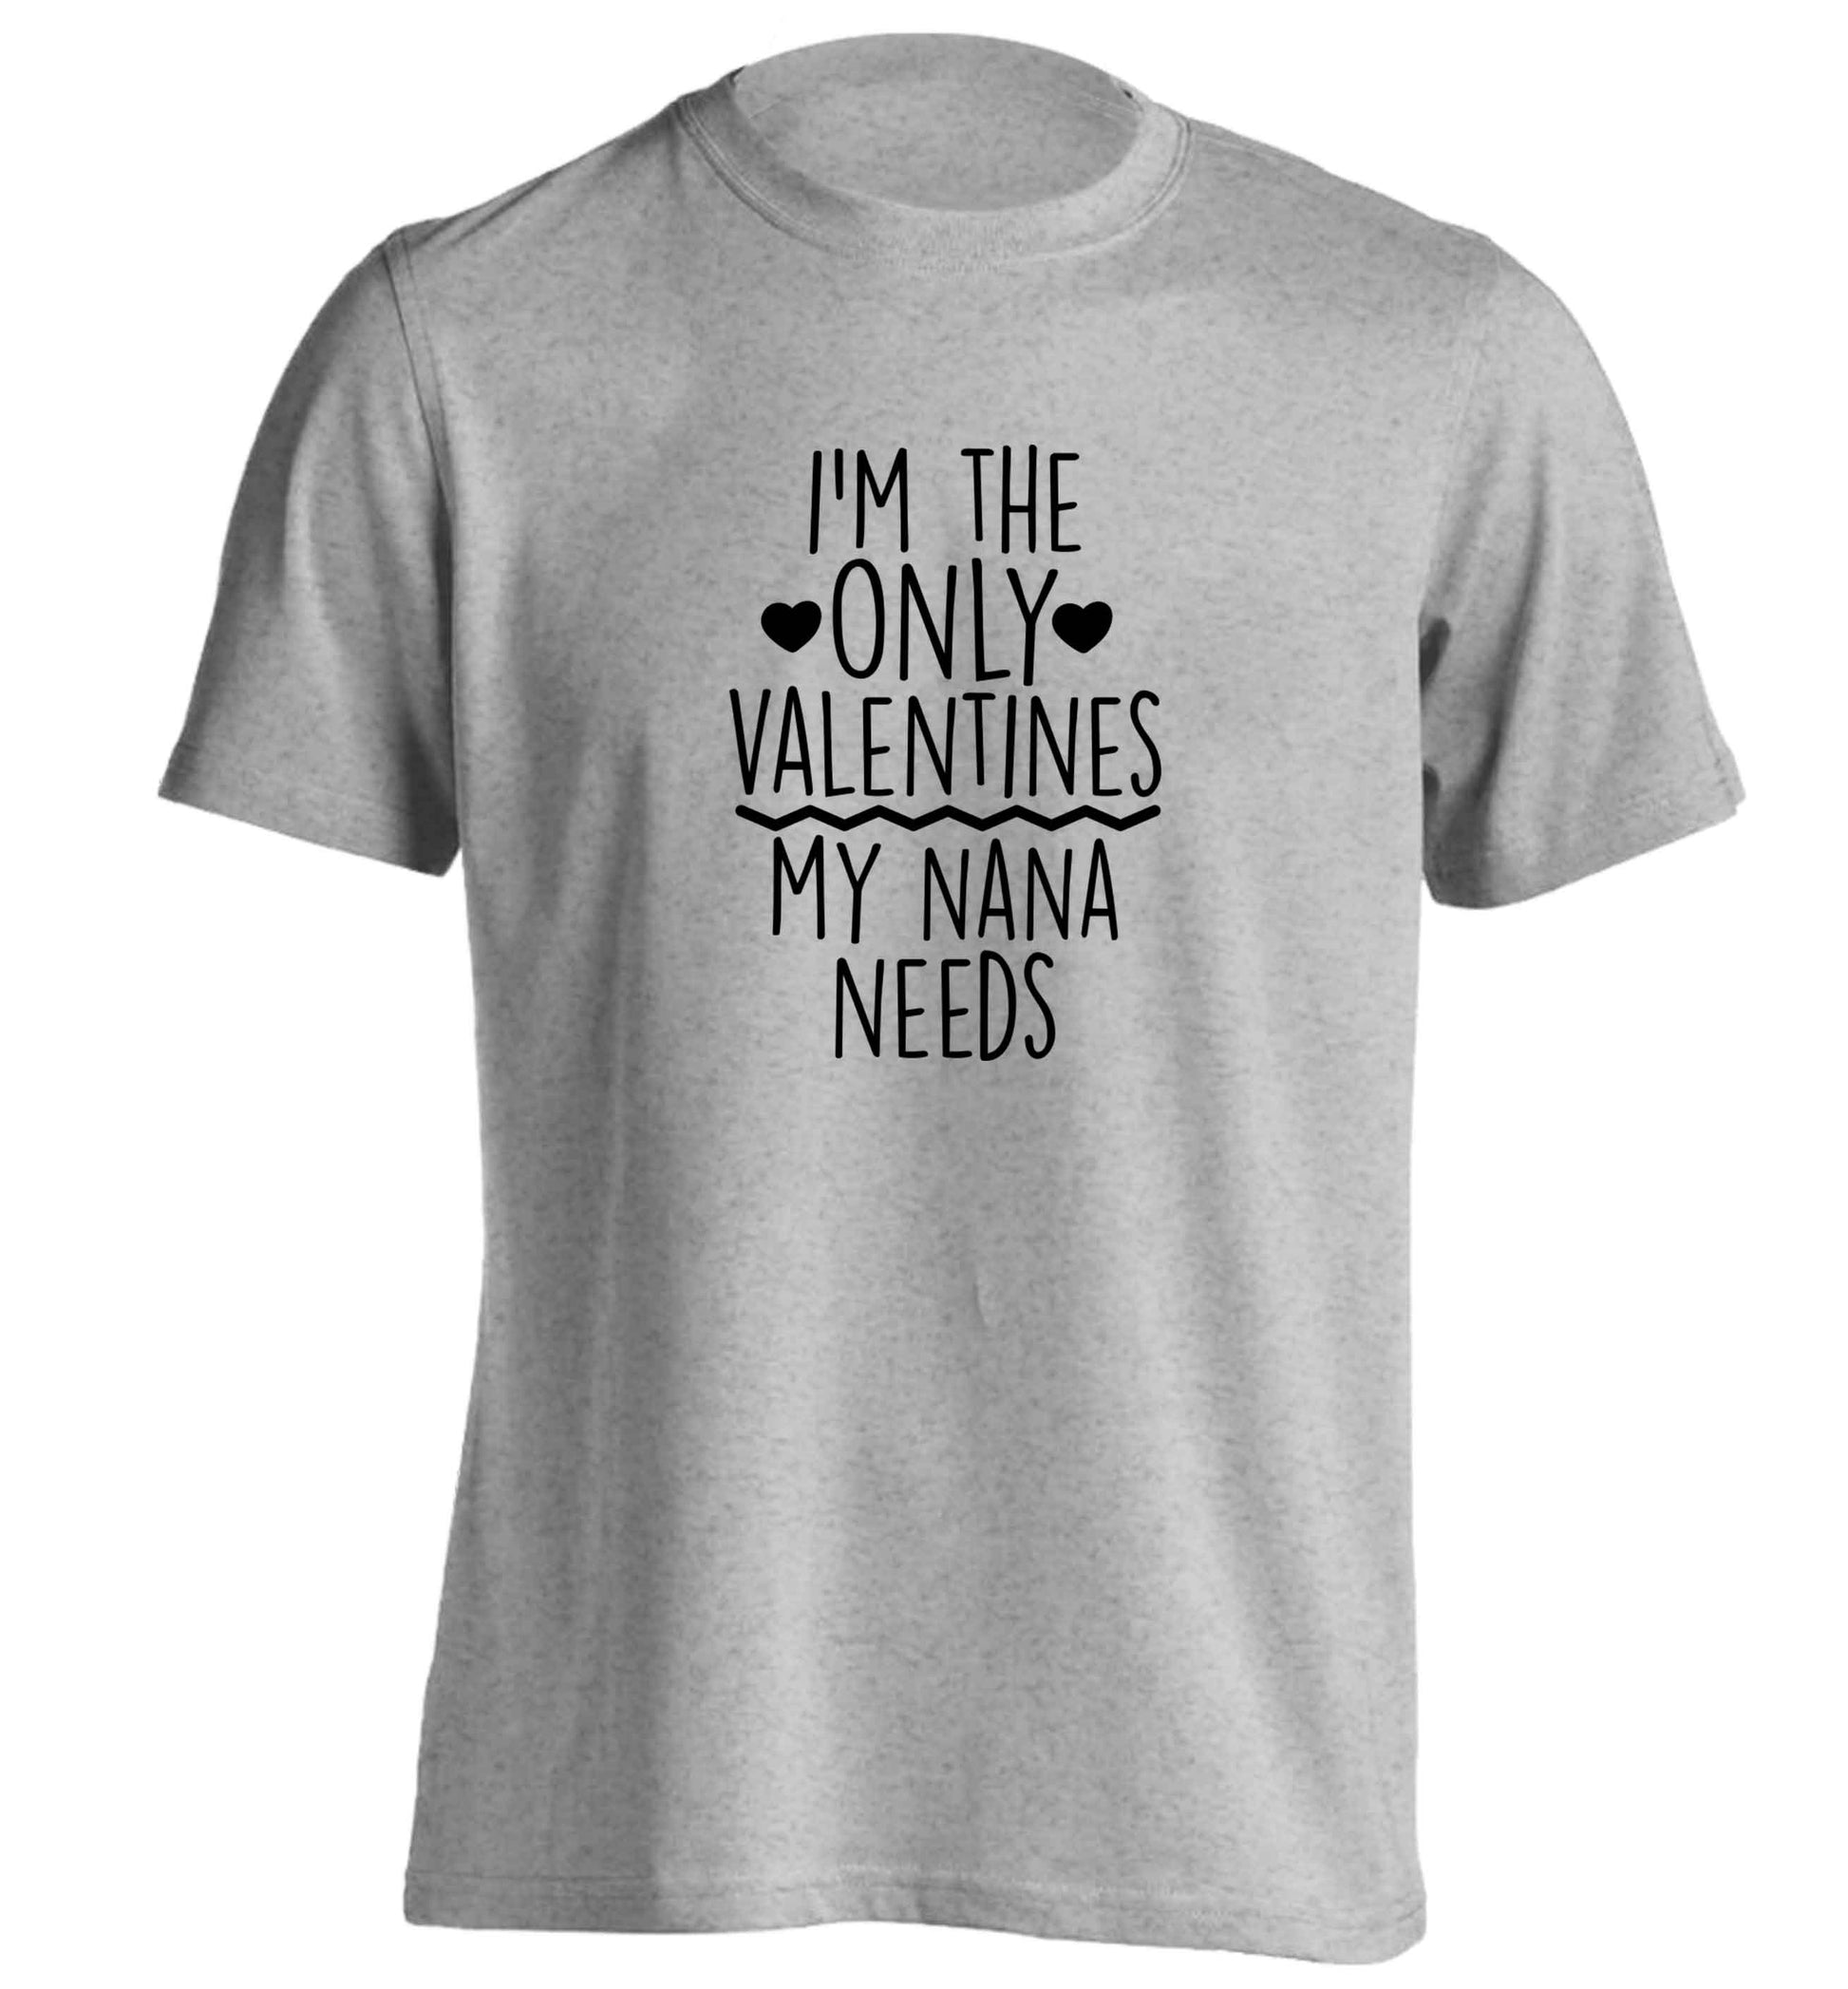 I'm the only valentines my nana needs adults unisex grey Tshirt 2XL